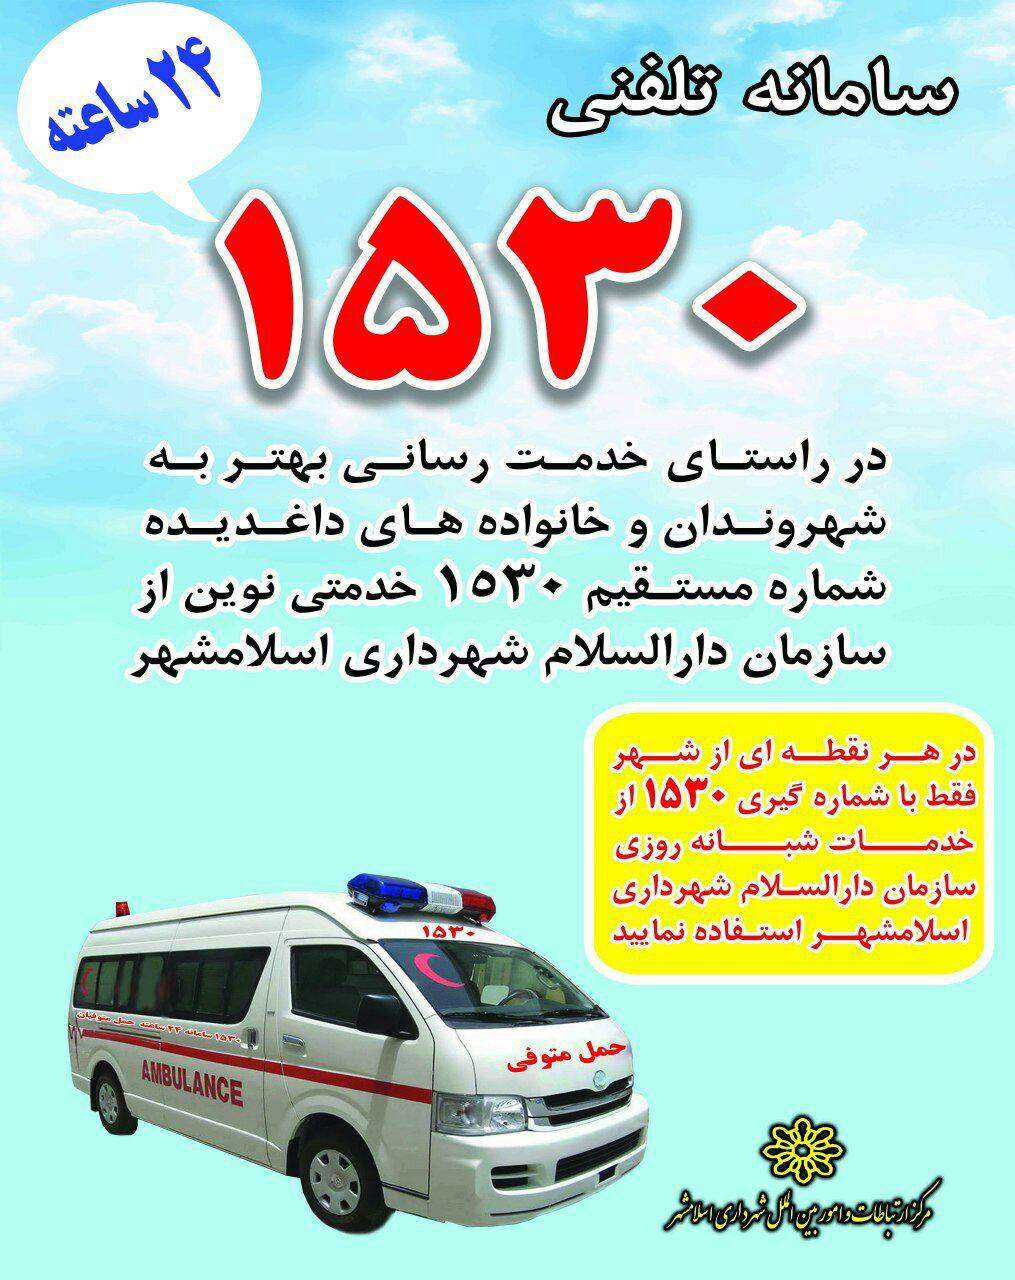 ️ راه اندازی سامانه تلفنی 1530 سازمان آرامستانهای شهرداری اسلامشهر